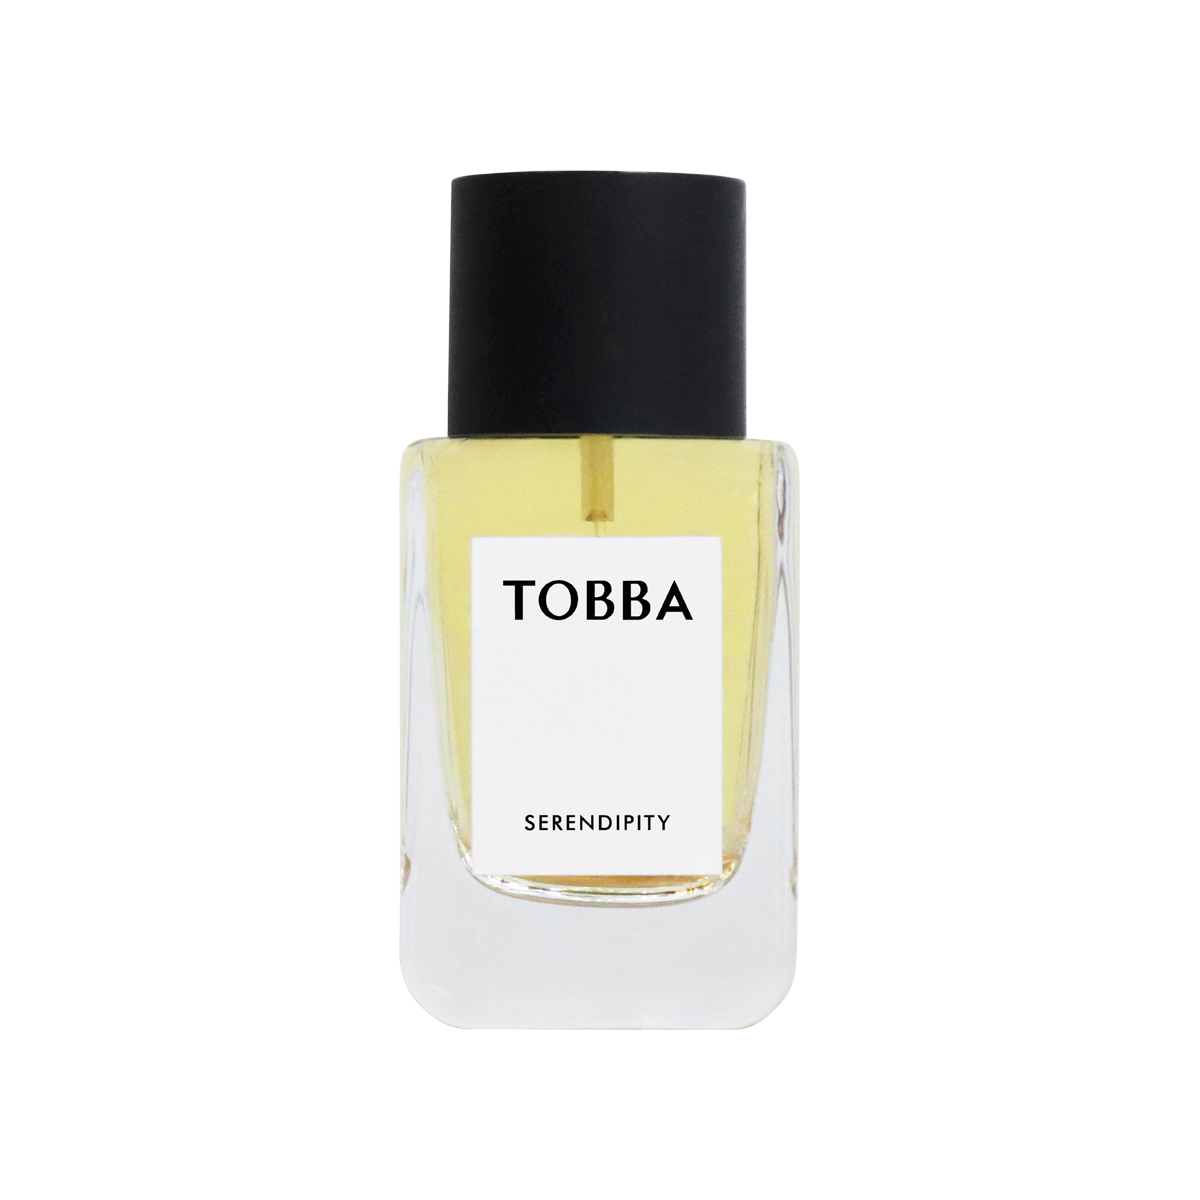 TOBBA - Serendipity Eau de Parfum